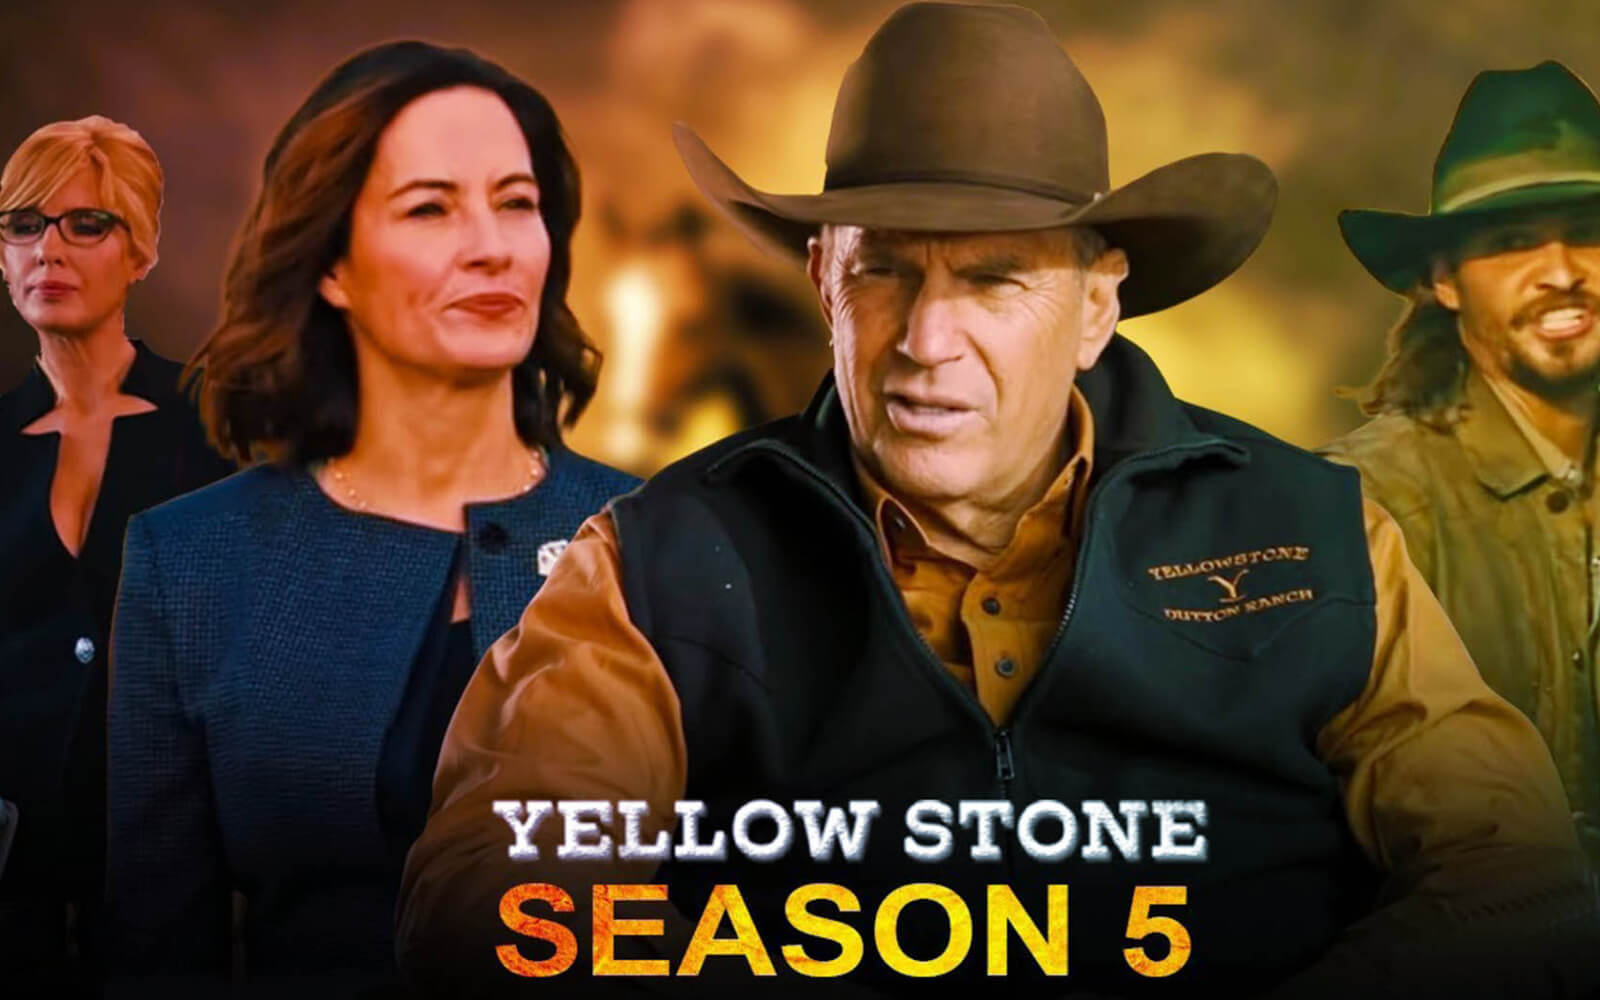 yellowstone season 4 episode 1 release date on peacock